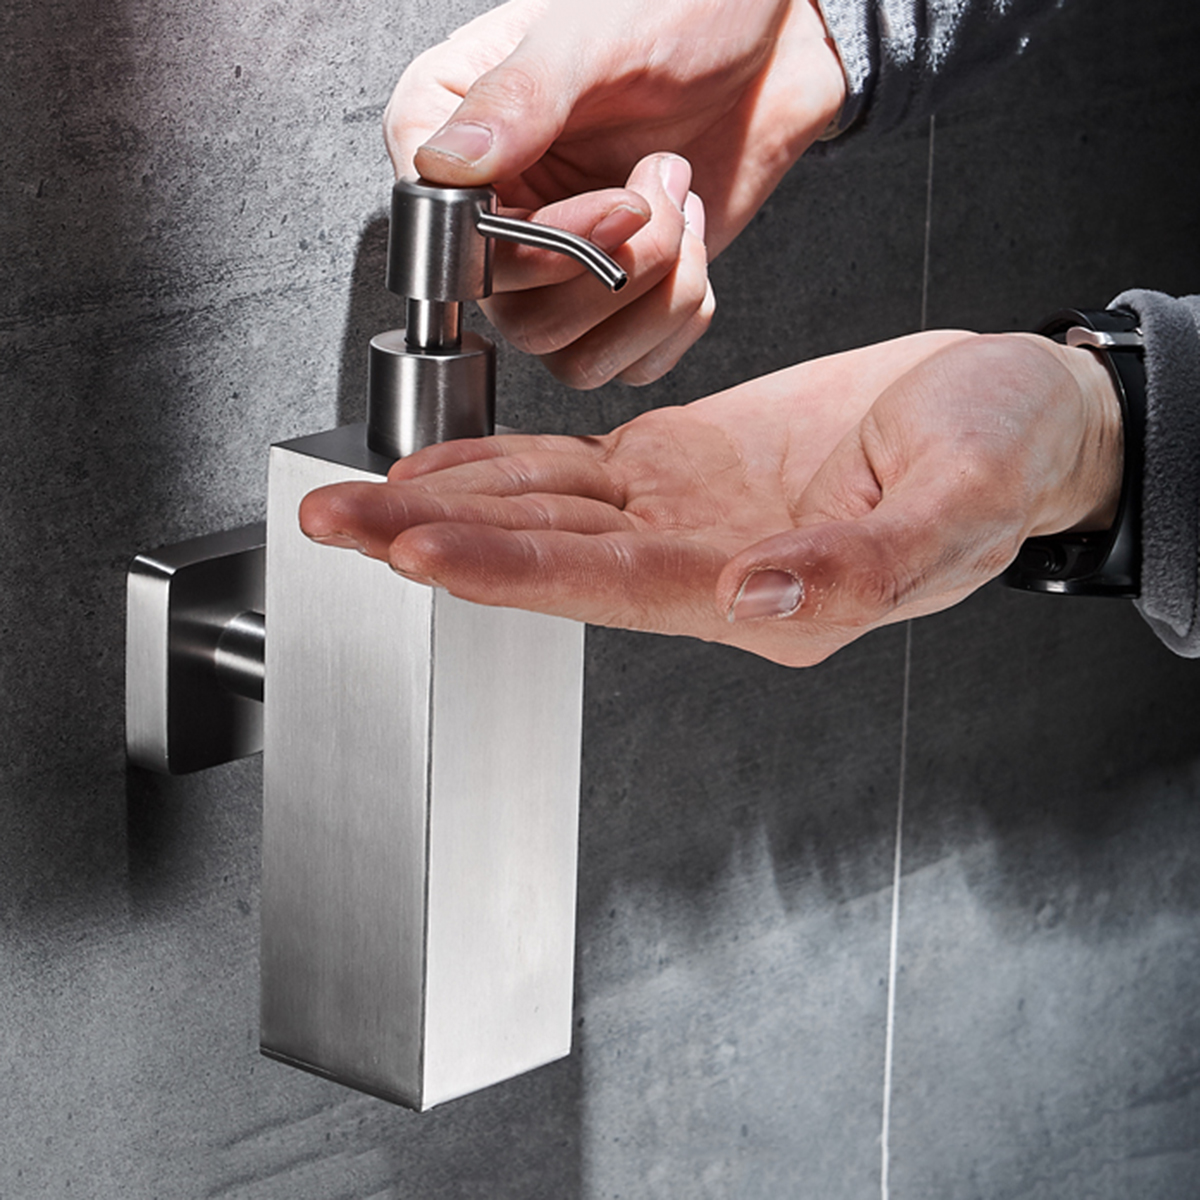 Stainless-Steel-Hand-Soap-Dispenser-Liquid-Bottle-Holder-Wall-Mounted-Bathroom-Storage-1427272-5